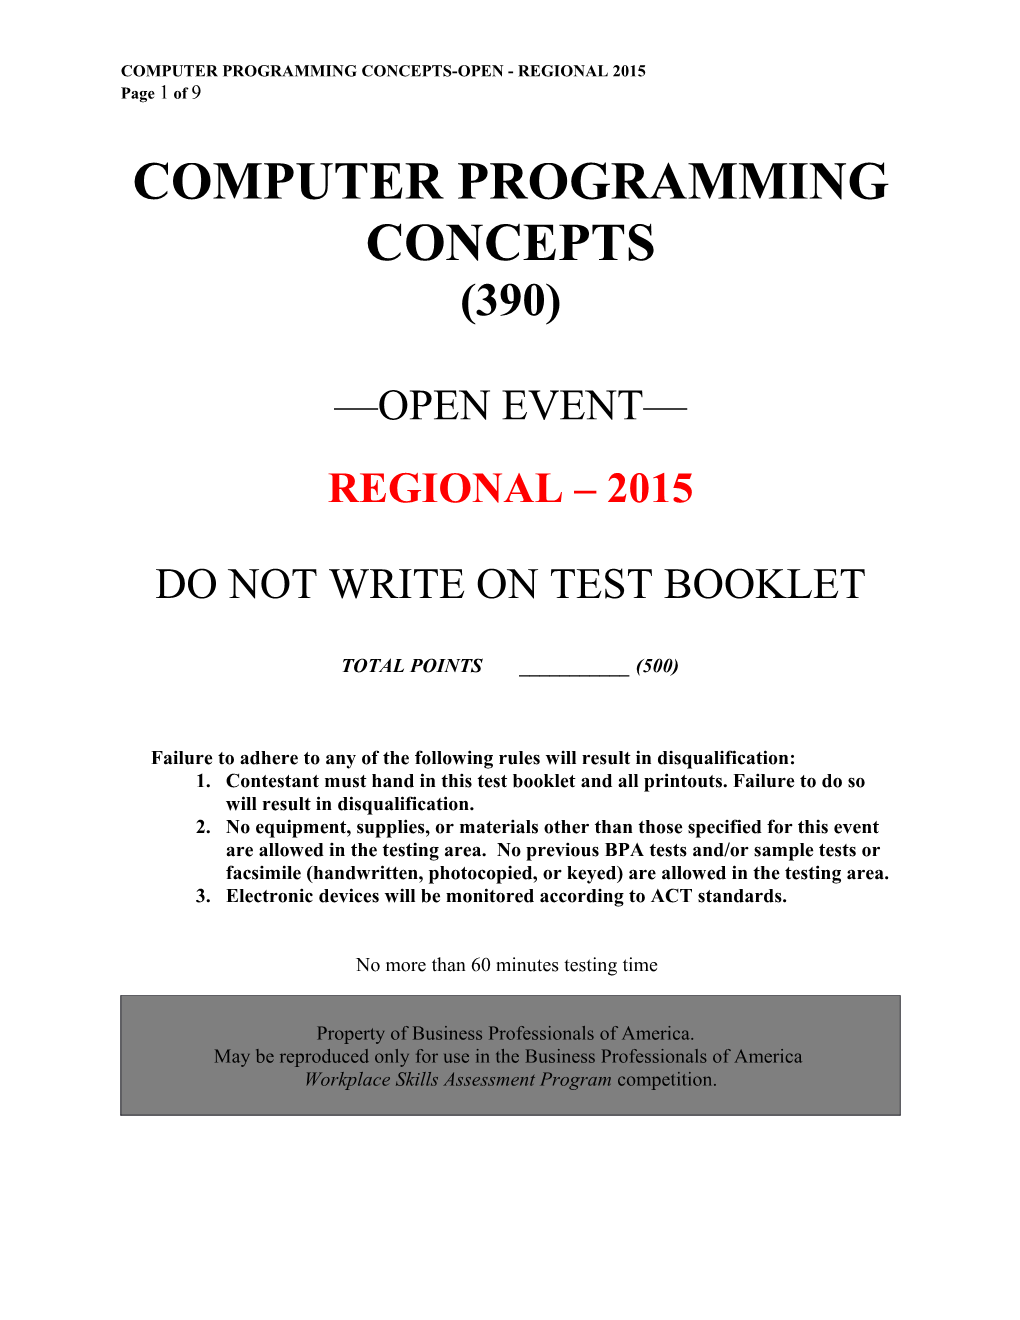 Computer Programming Concepts-Open - Regional 2015